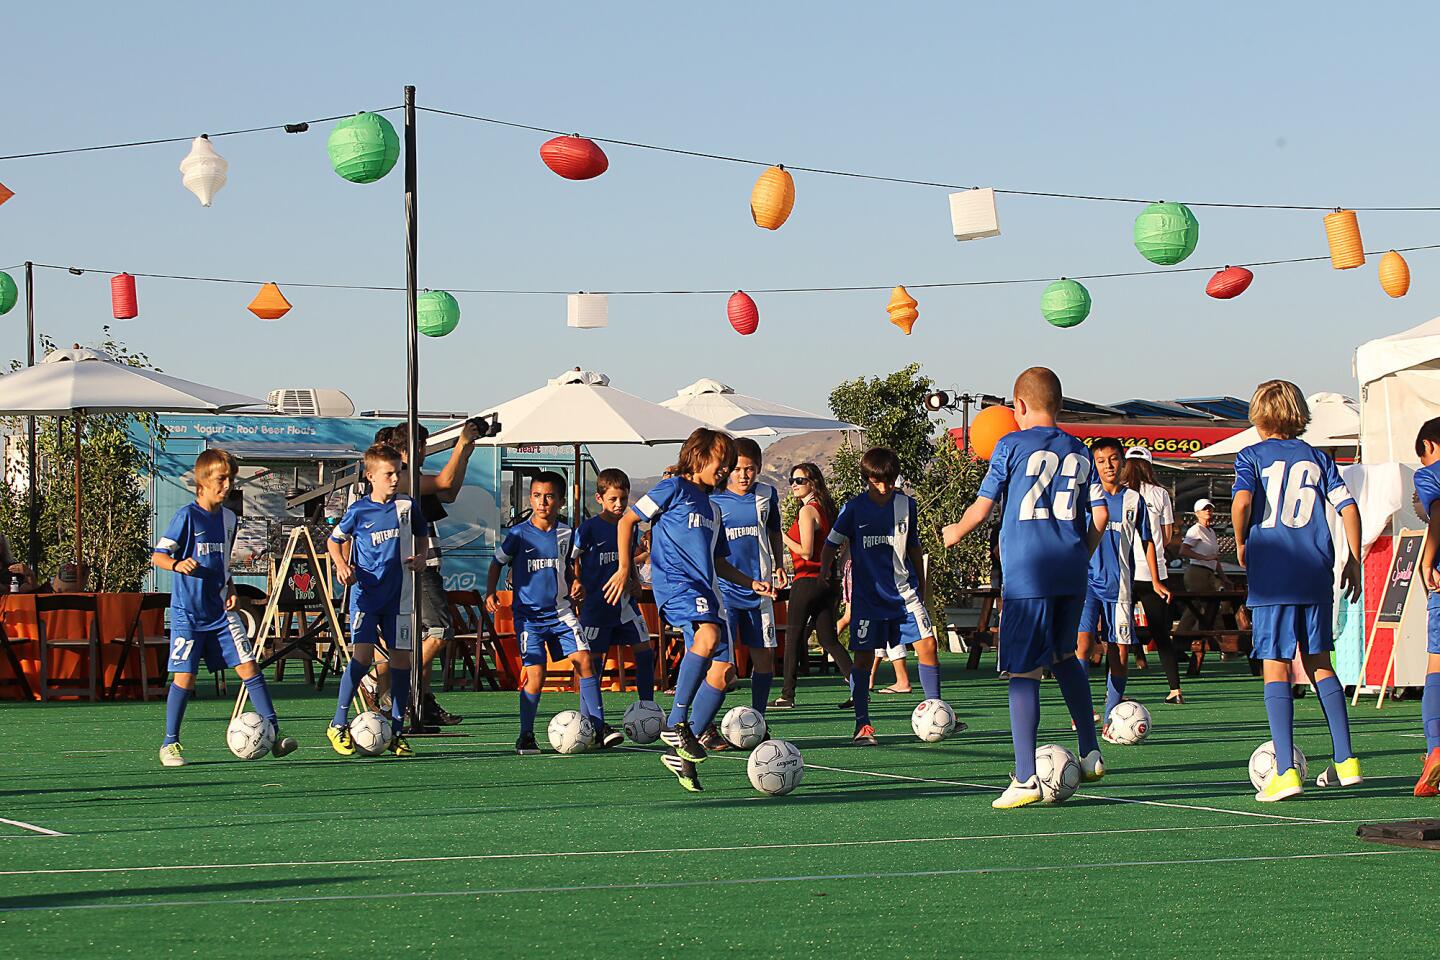 Ceremonial soccer